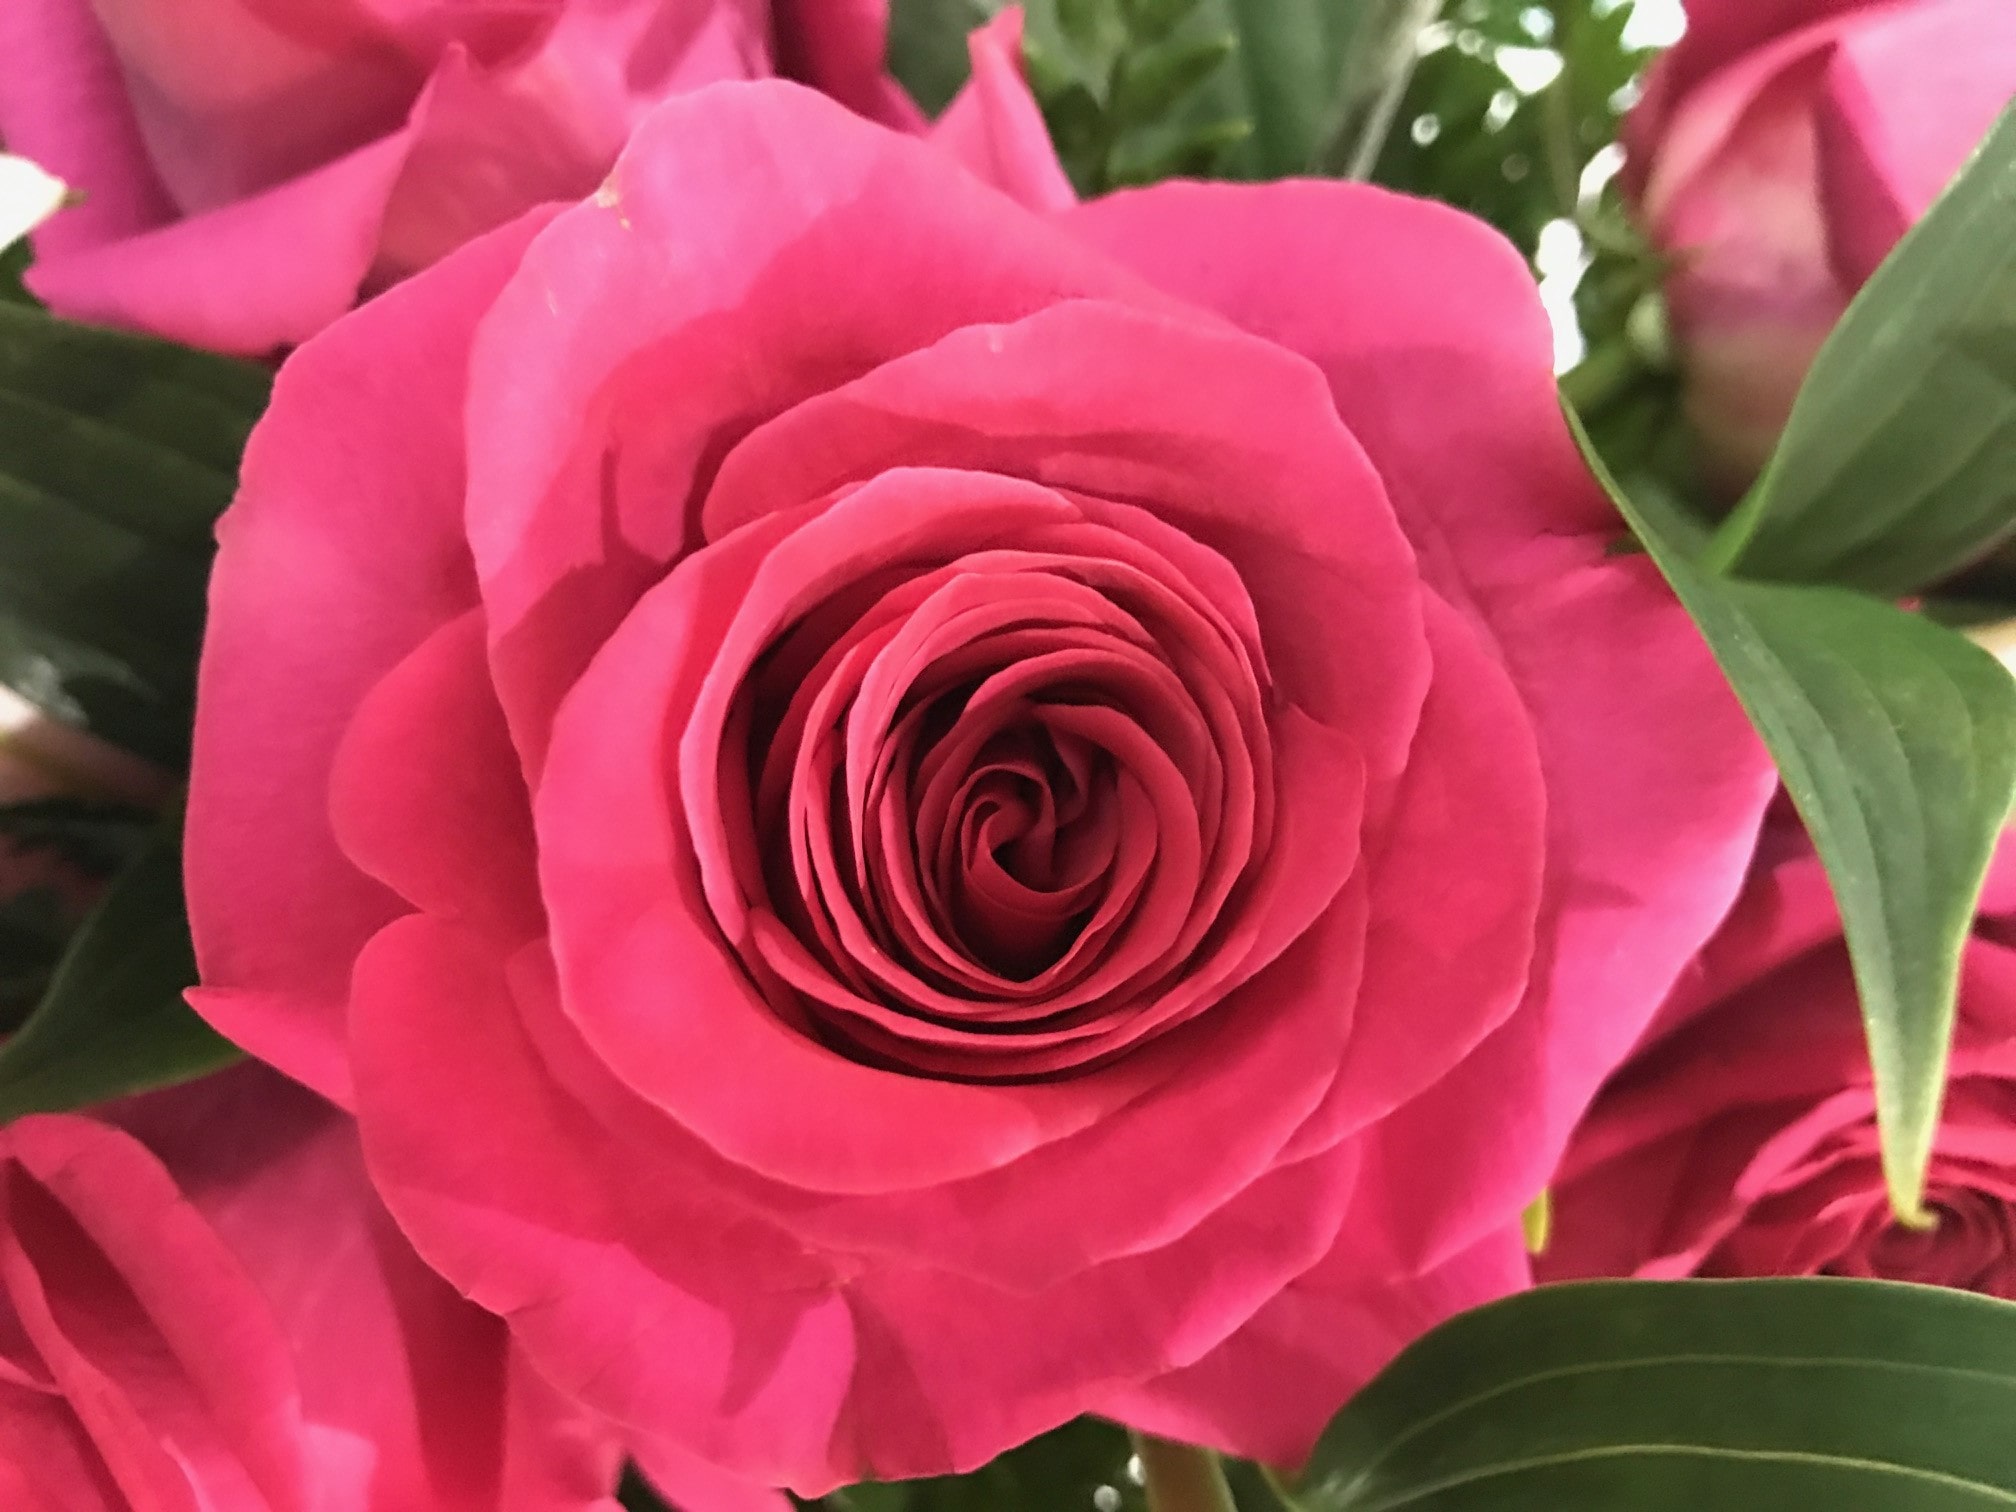 A Quién Enviar Flores A Domicilio De Color Rosa?